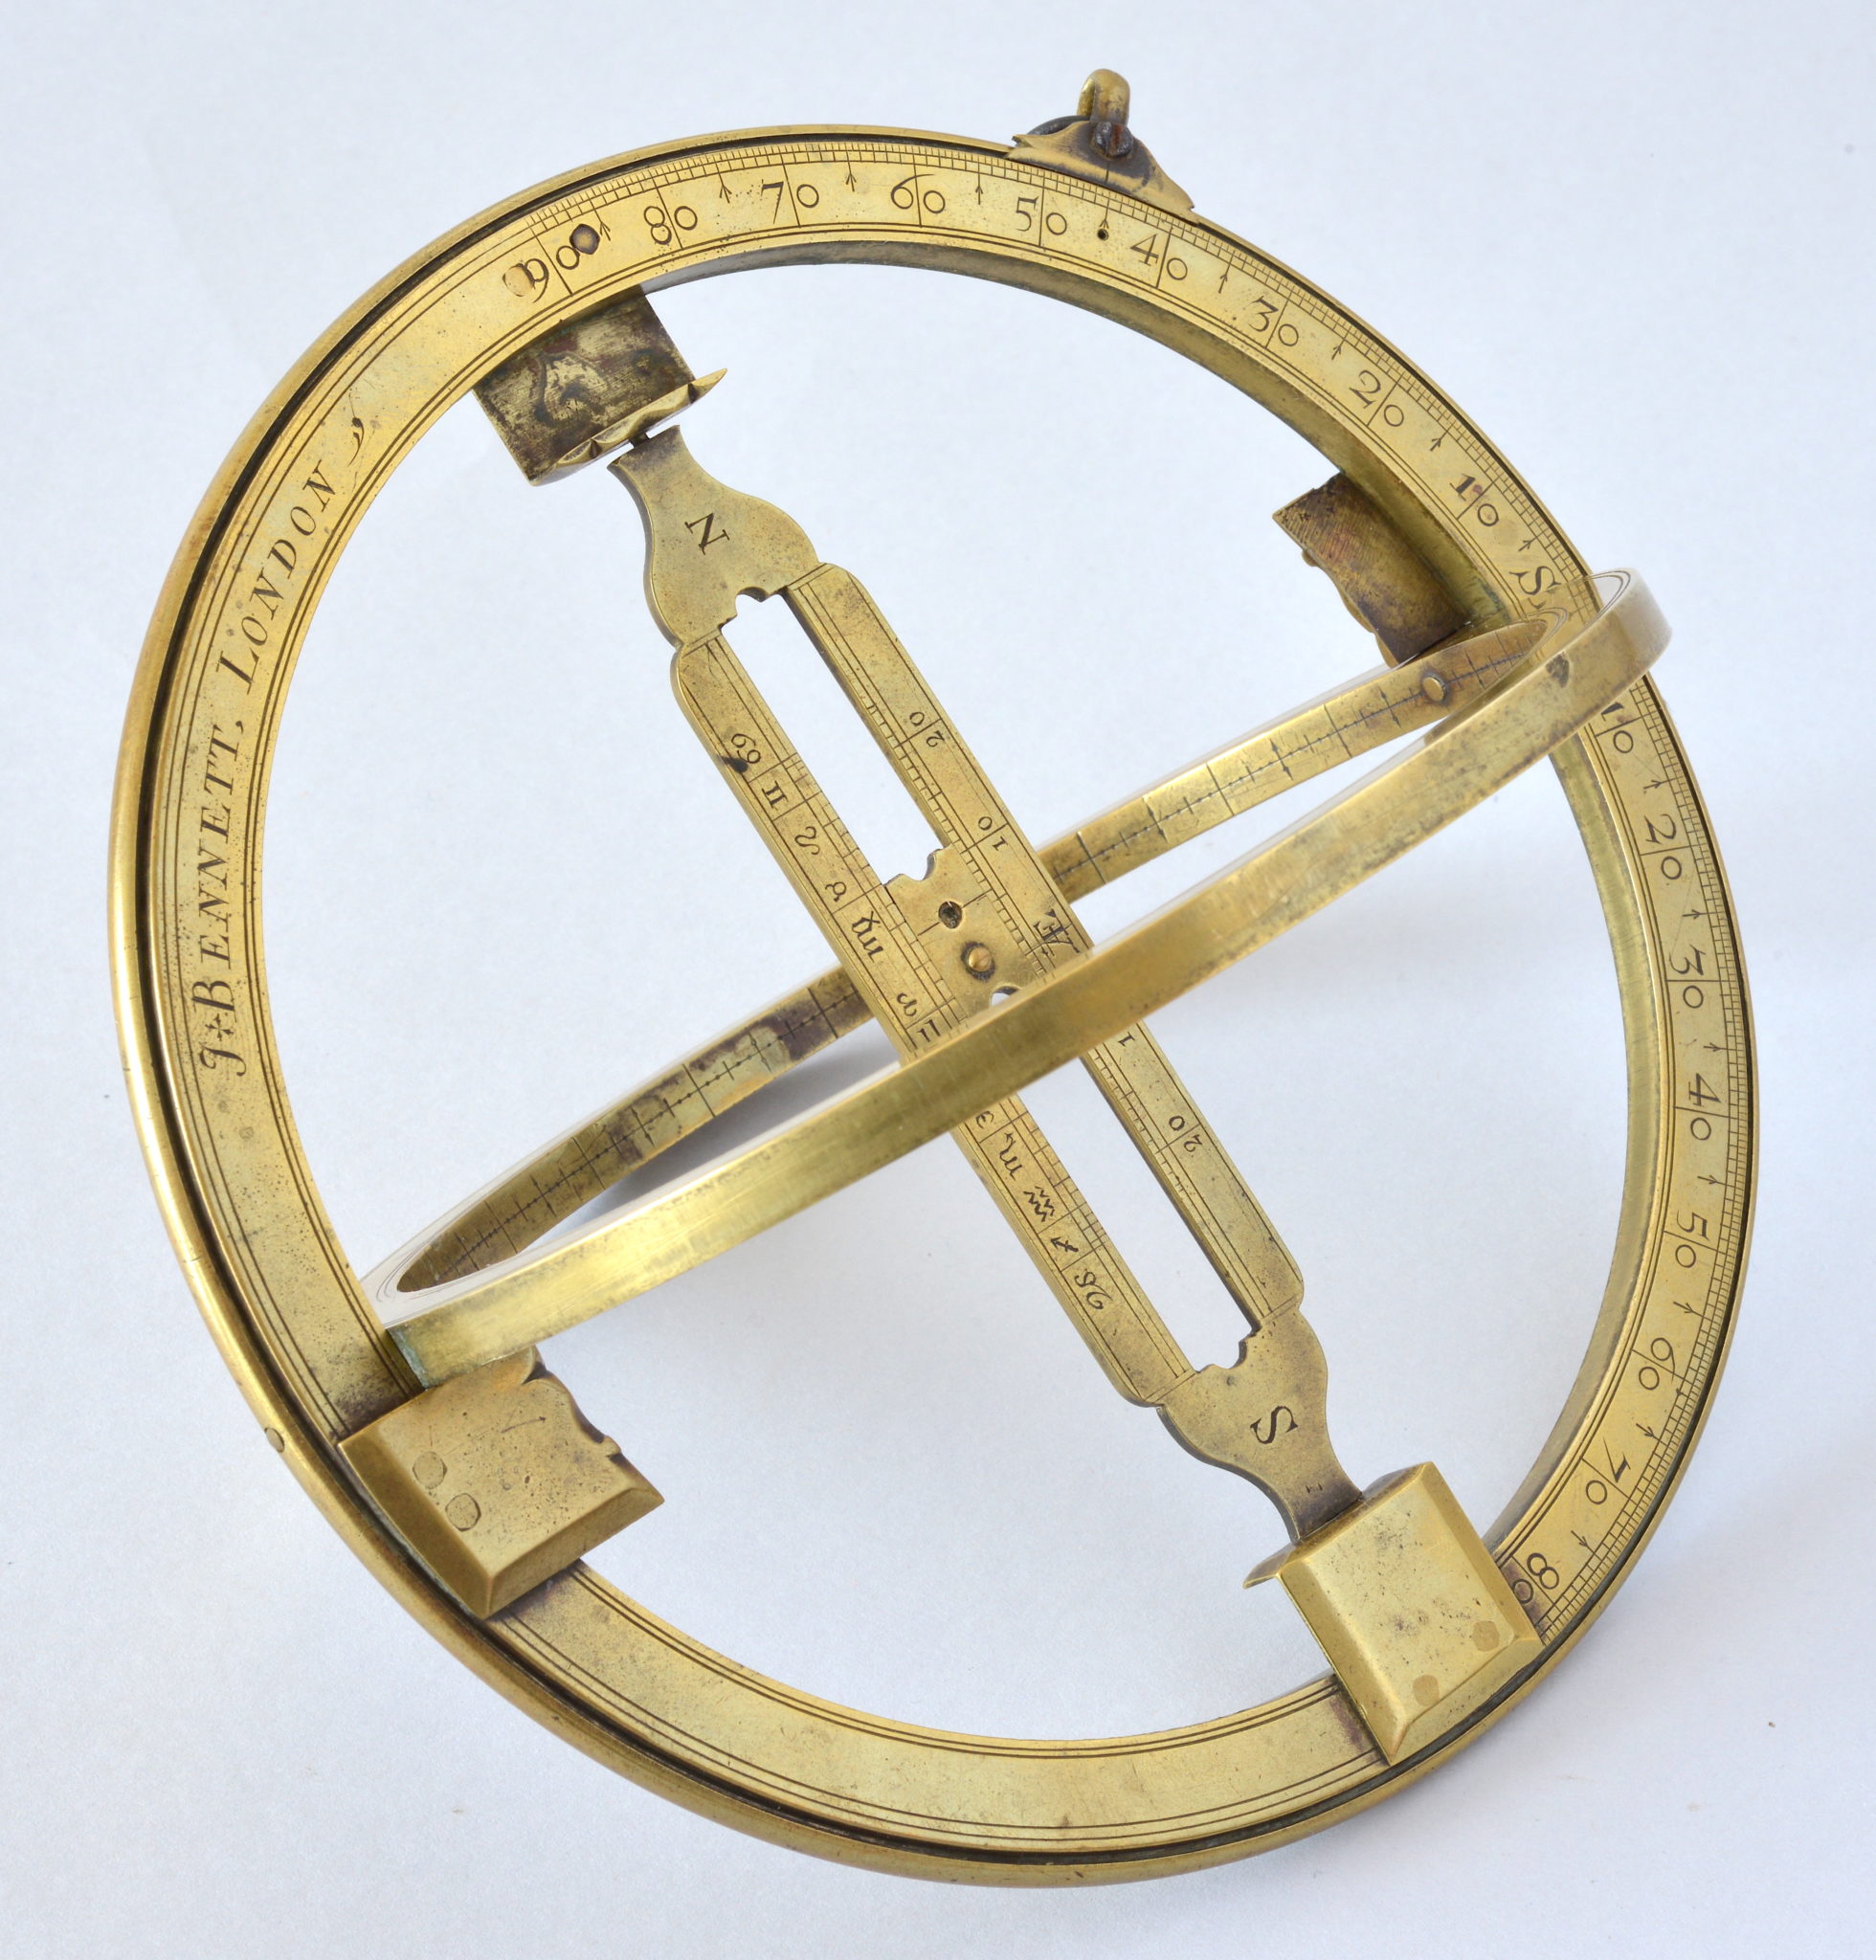 Large brass equatorial ring signed J. BENNETT LONDON made circa 1730/1740